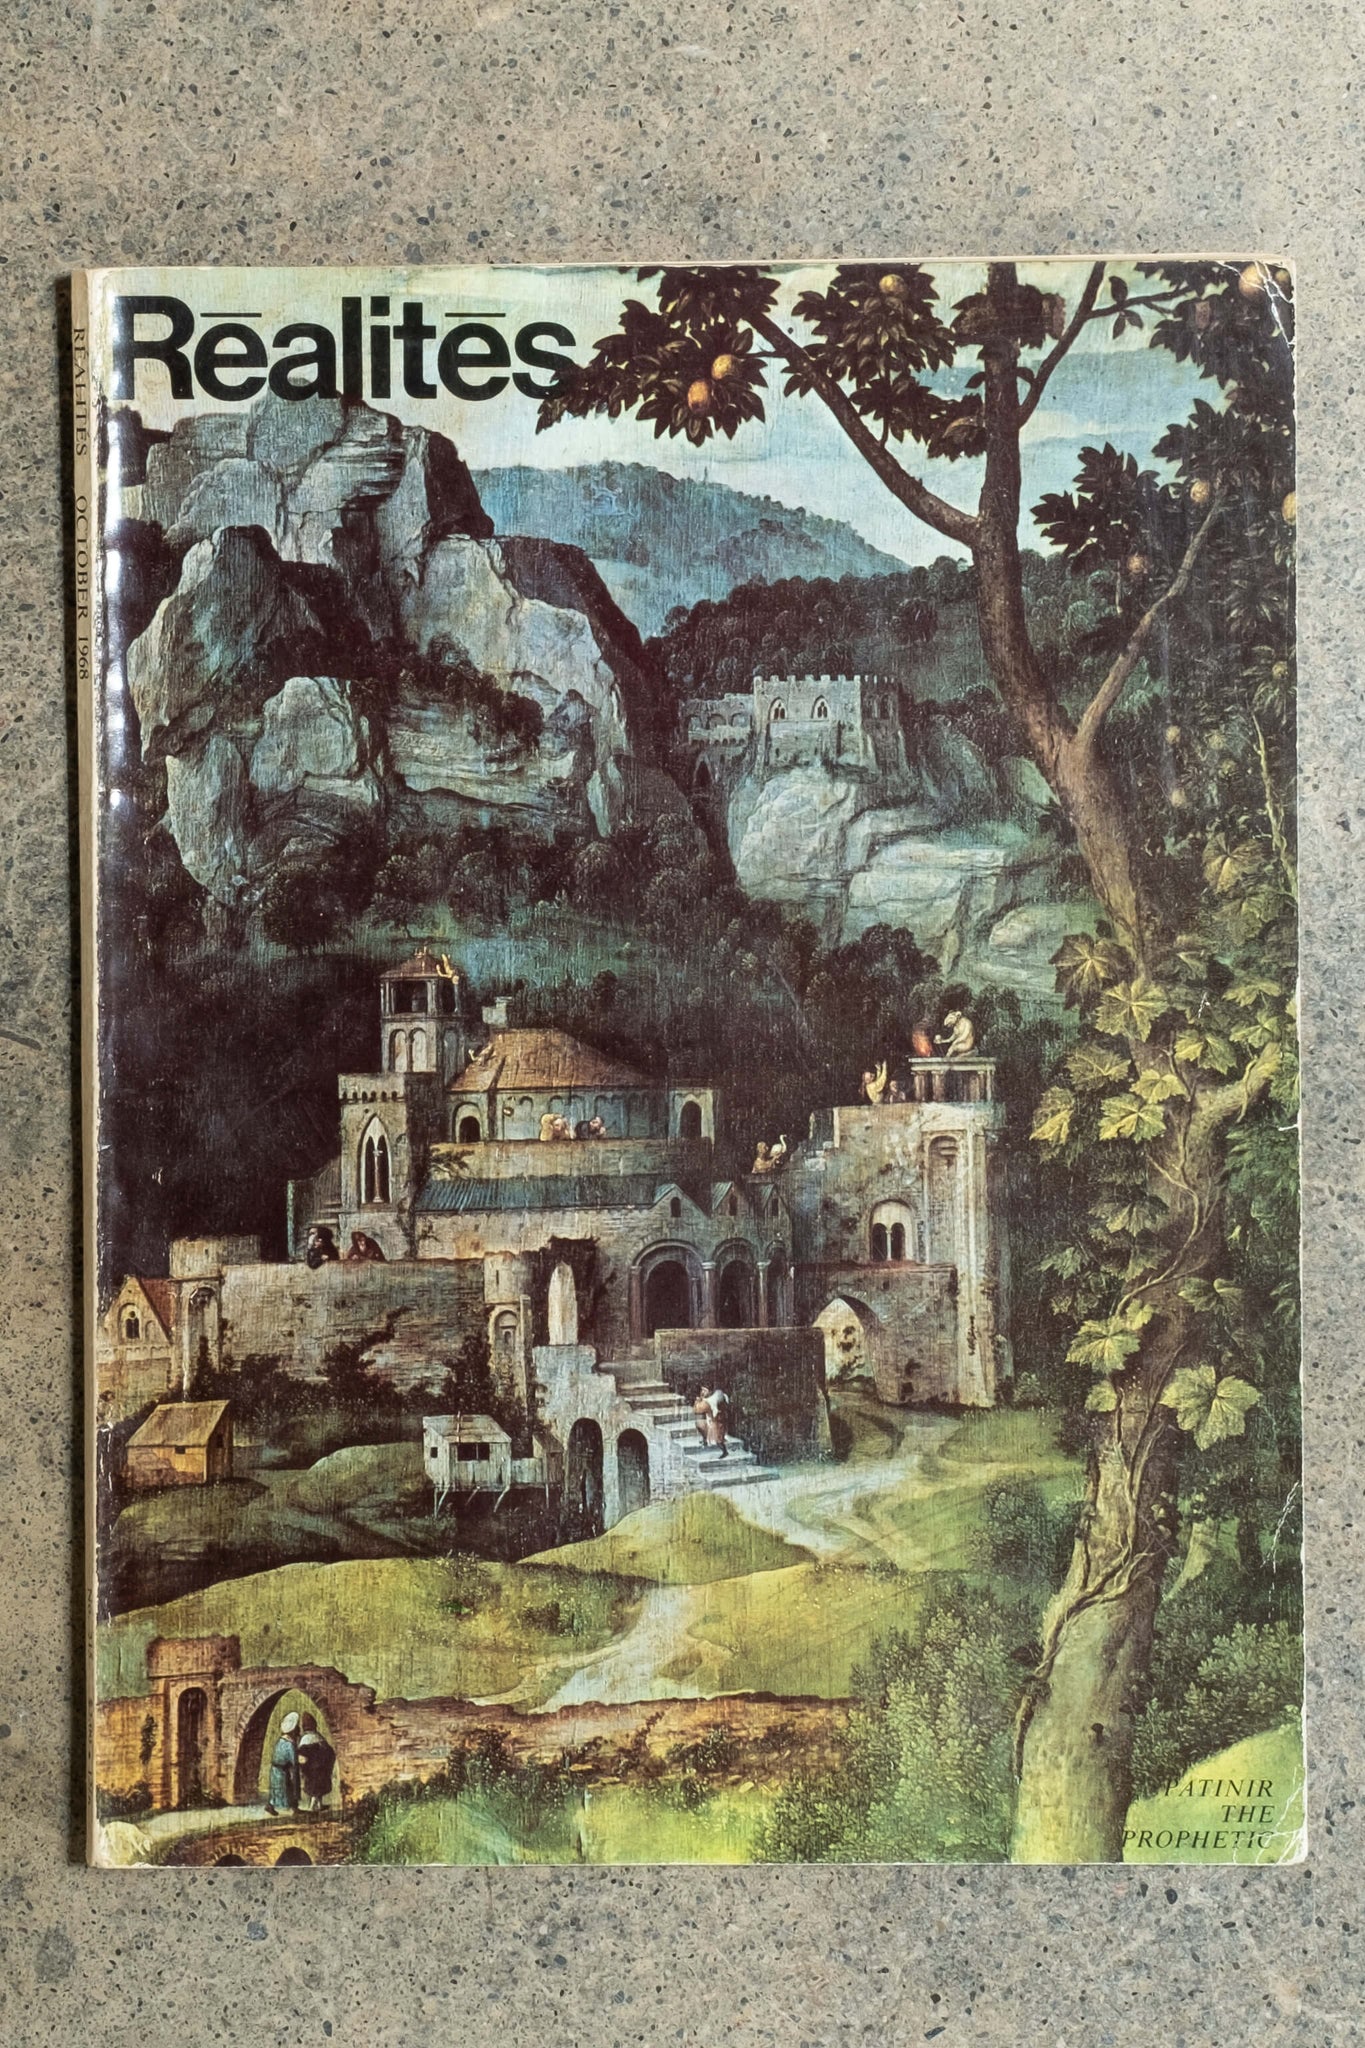 Realites Magazine - October 1968